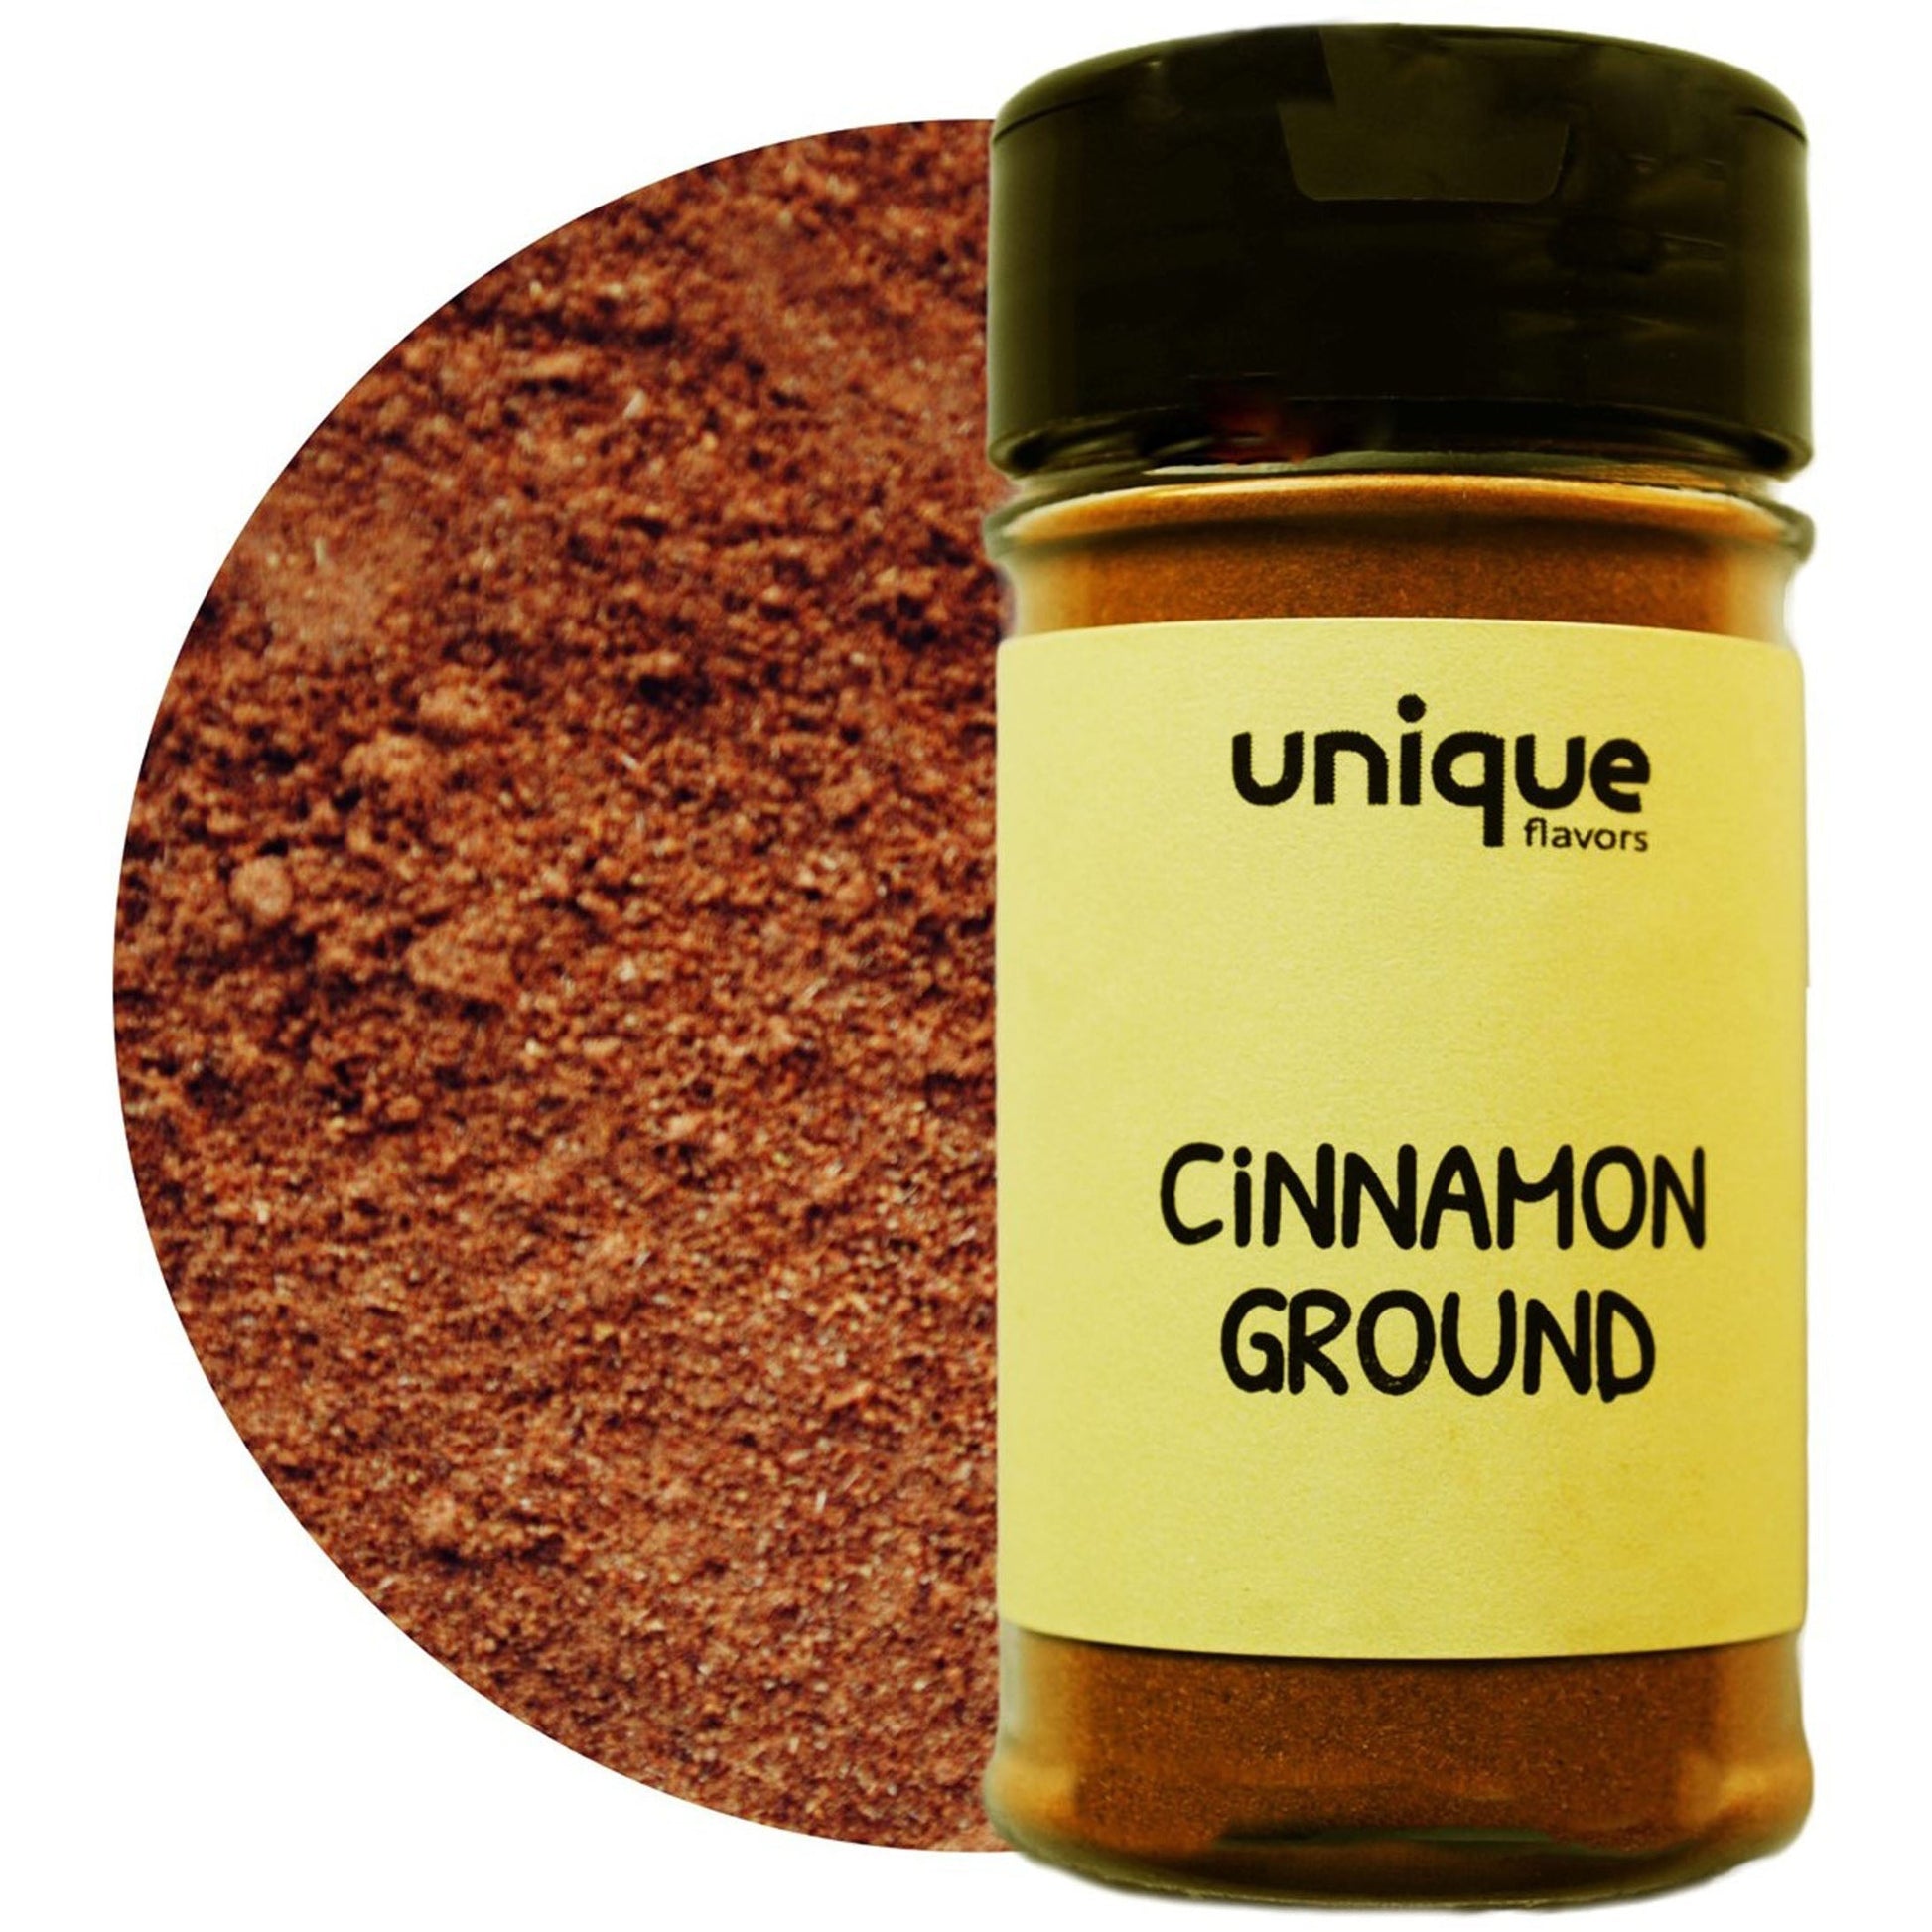 Cinnamon Ground 1.7oz Easy Shaker - Unique Flavors Spices and Art Unique Flavors LLC 